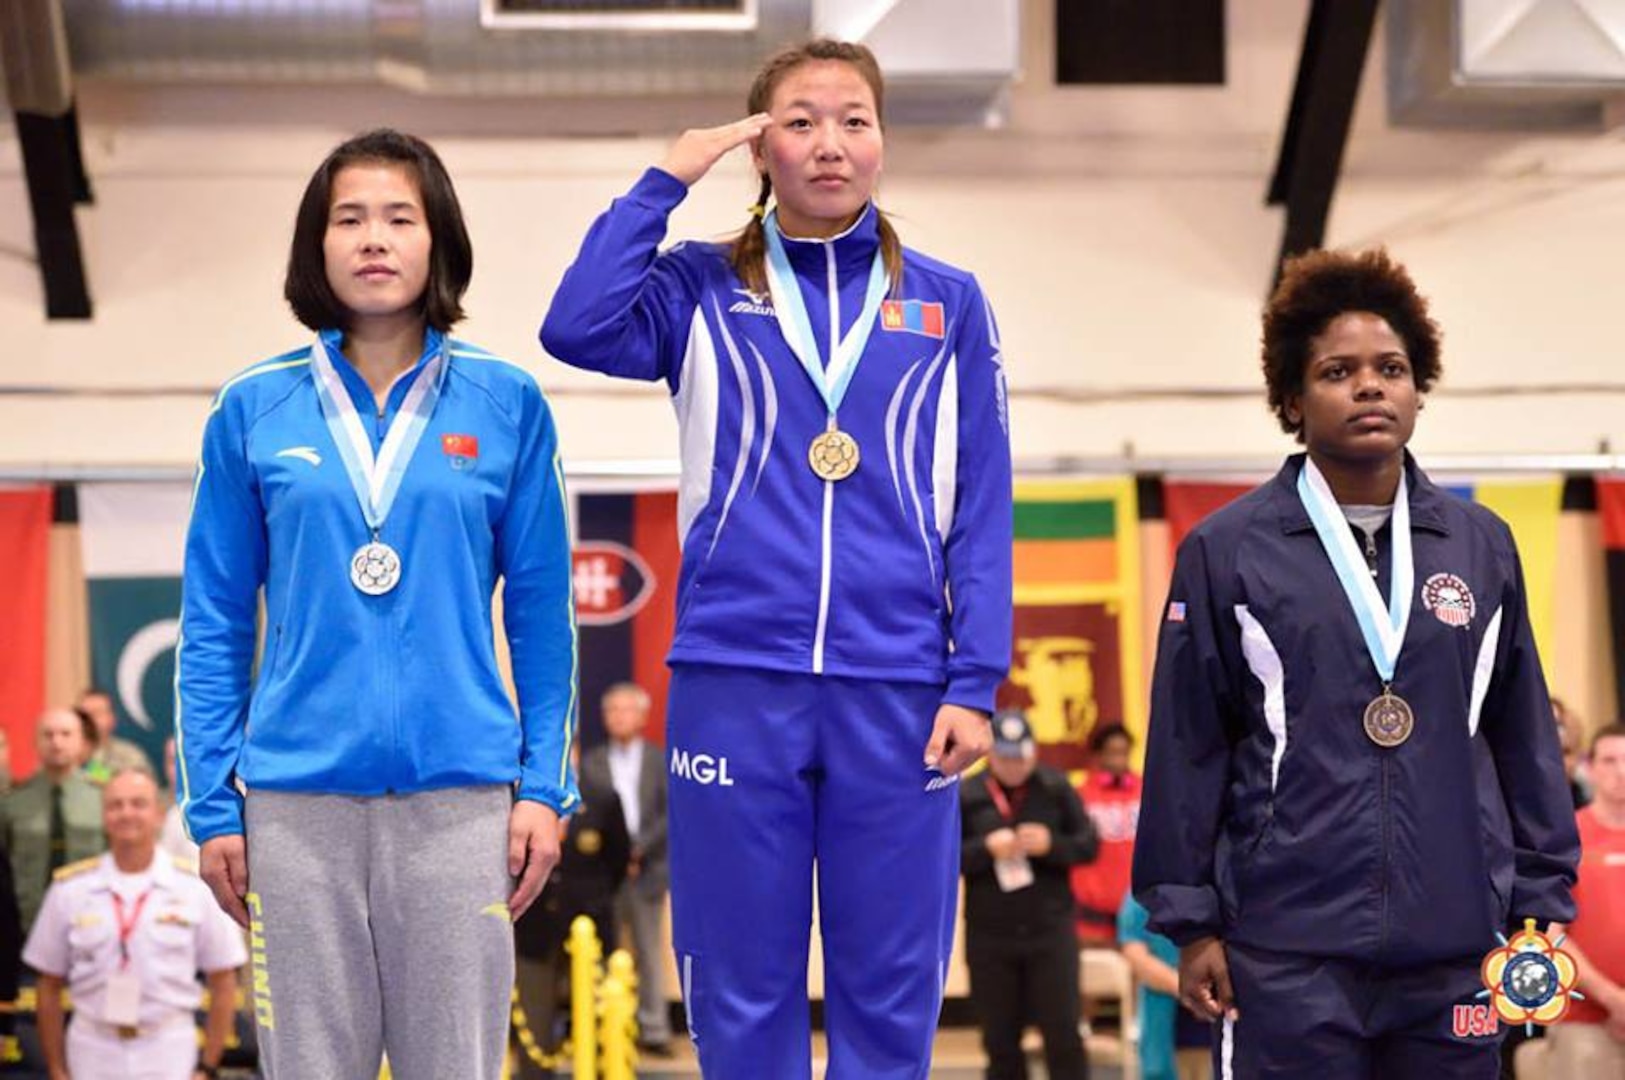 Mongolia wins gold: 60 kg
Gold- Tserenchimed Sukhee (Mongolia)
Silver- Xiaofang Chen (China) 
Bronze - Othella Feroleto (USA) 
